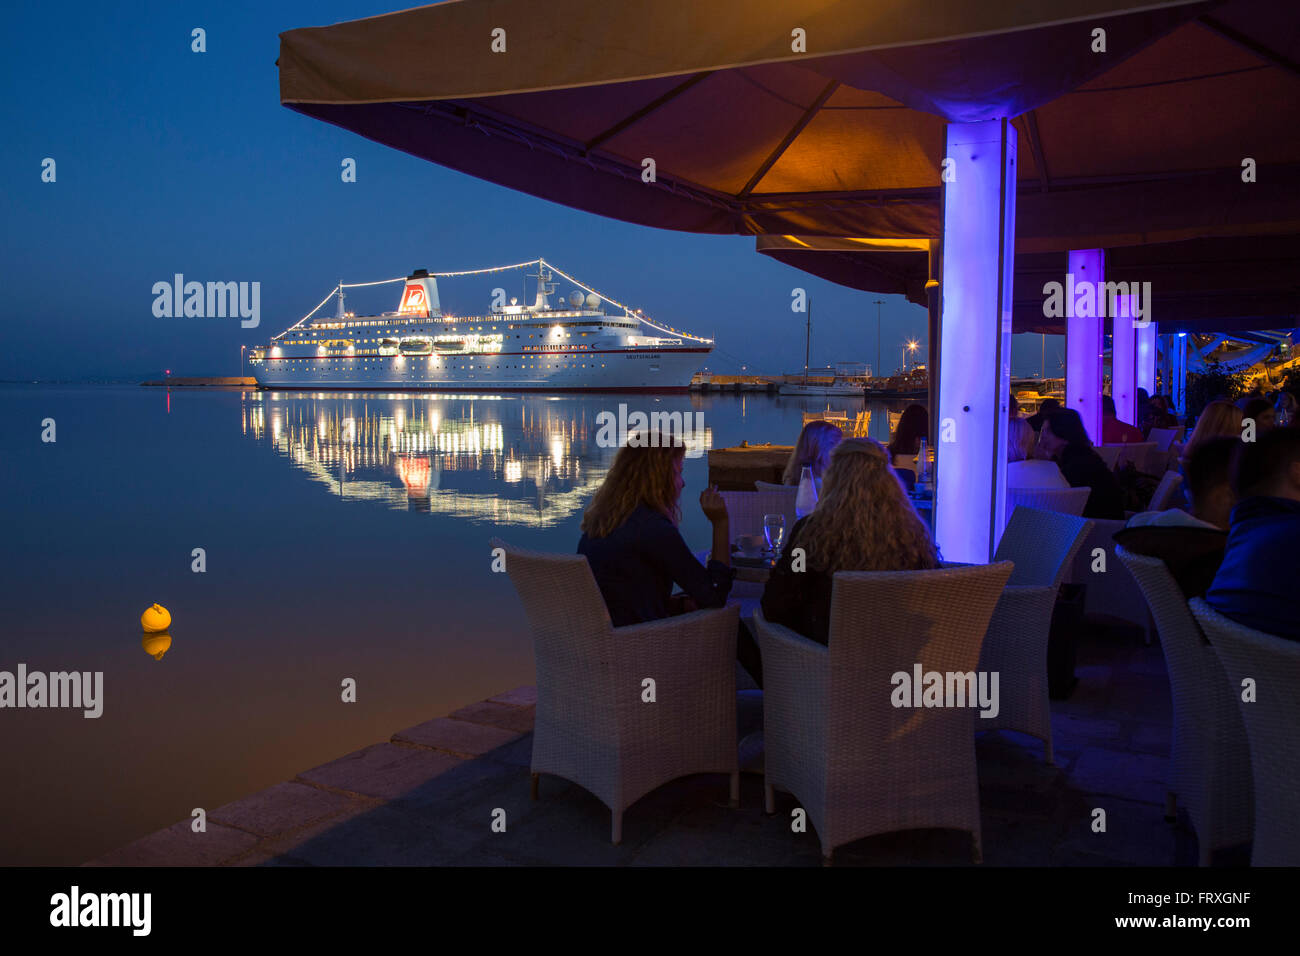 People in a restaurant in the evening with the cruise ship MS Deutschland, Reederei Peter Deilmann at the pier , Katakolon, Pyrgos, Peloponnese, Greece Stock Photo